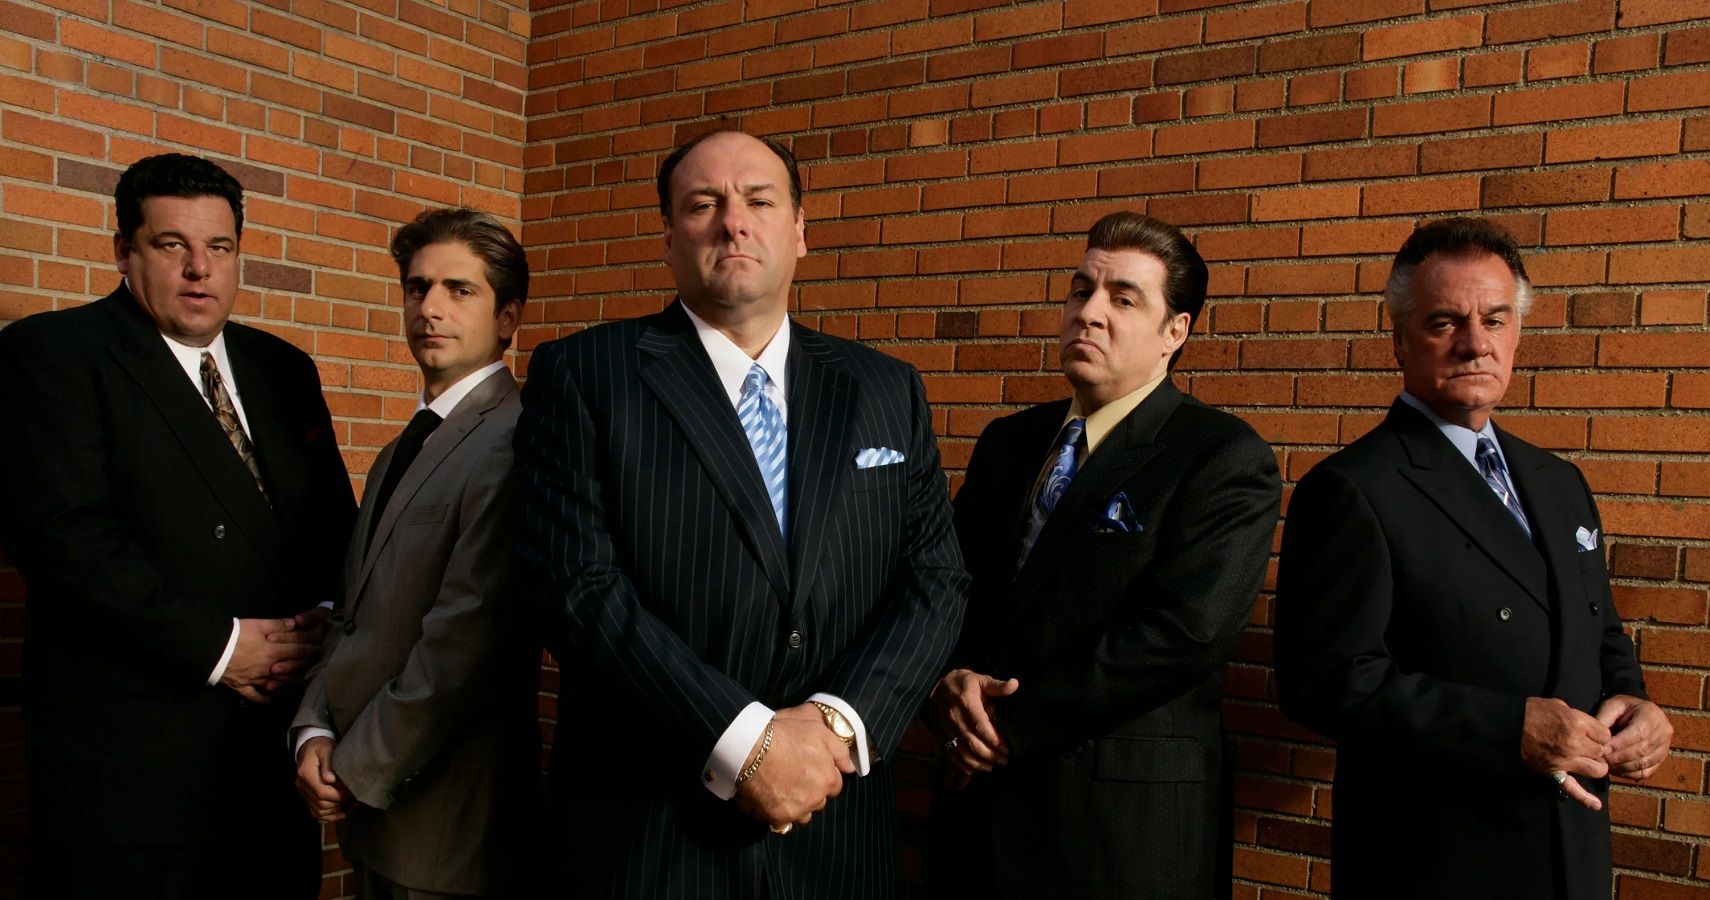 The Sopranos 10 Best Episodes Of Season 2 According To Imdb